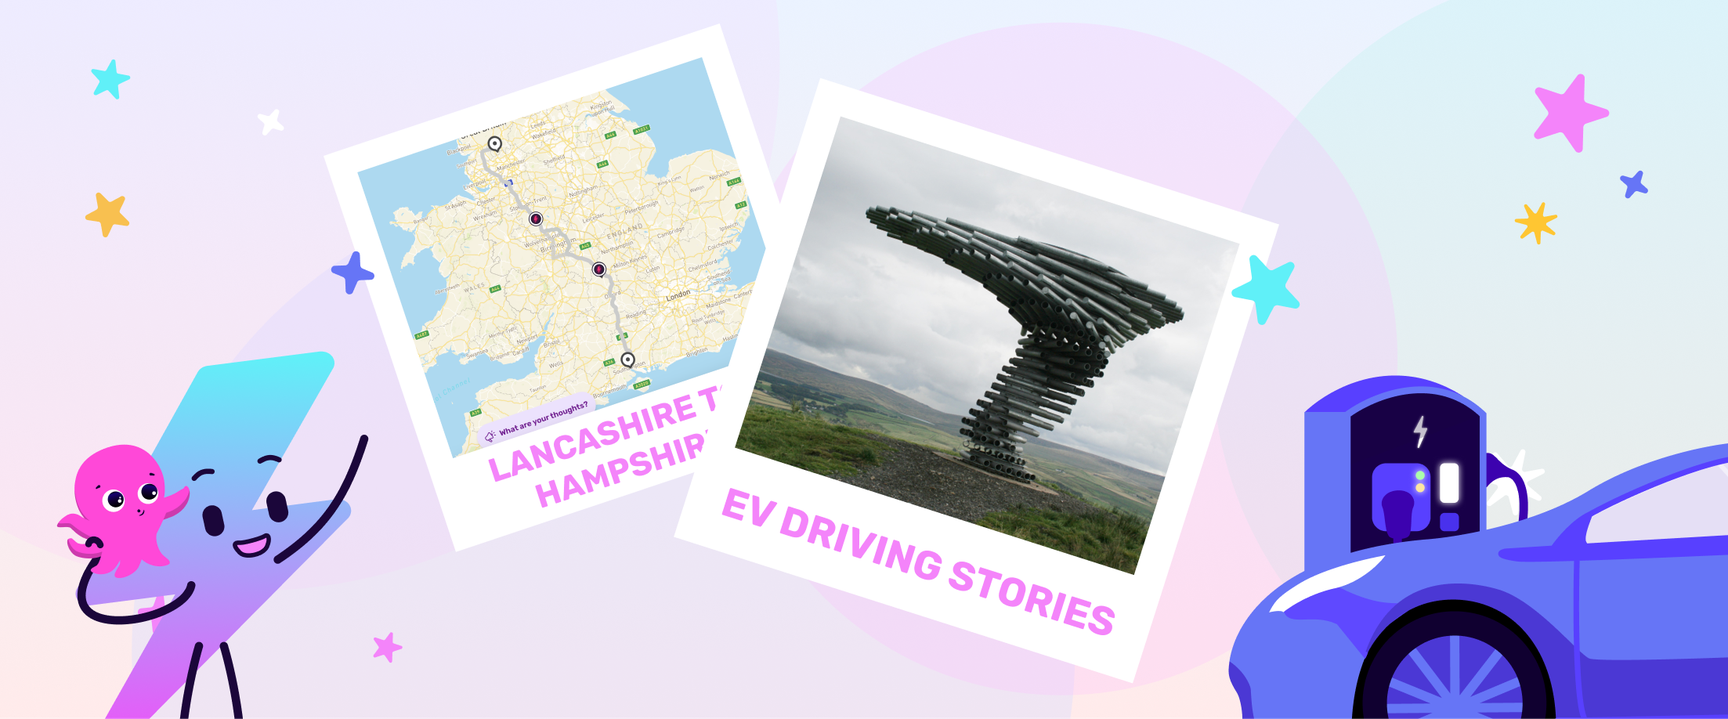 lancashire to hampshire EV driving stories 1